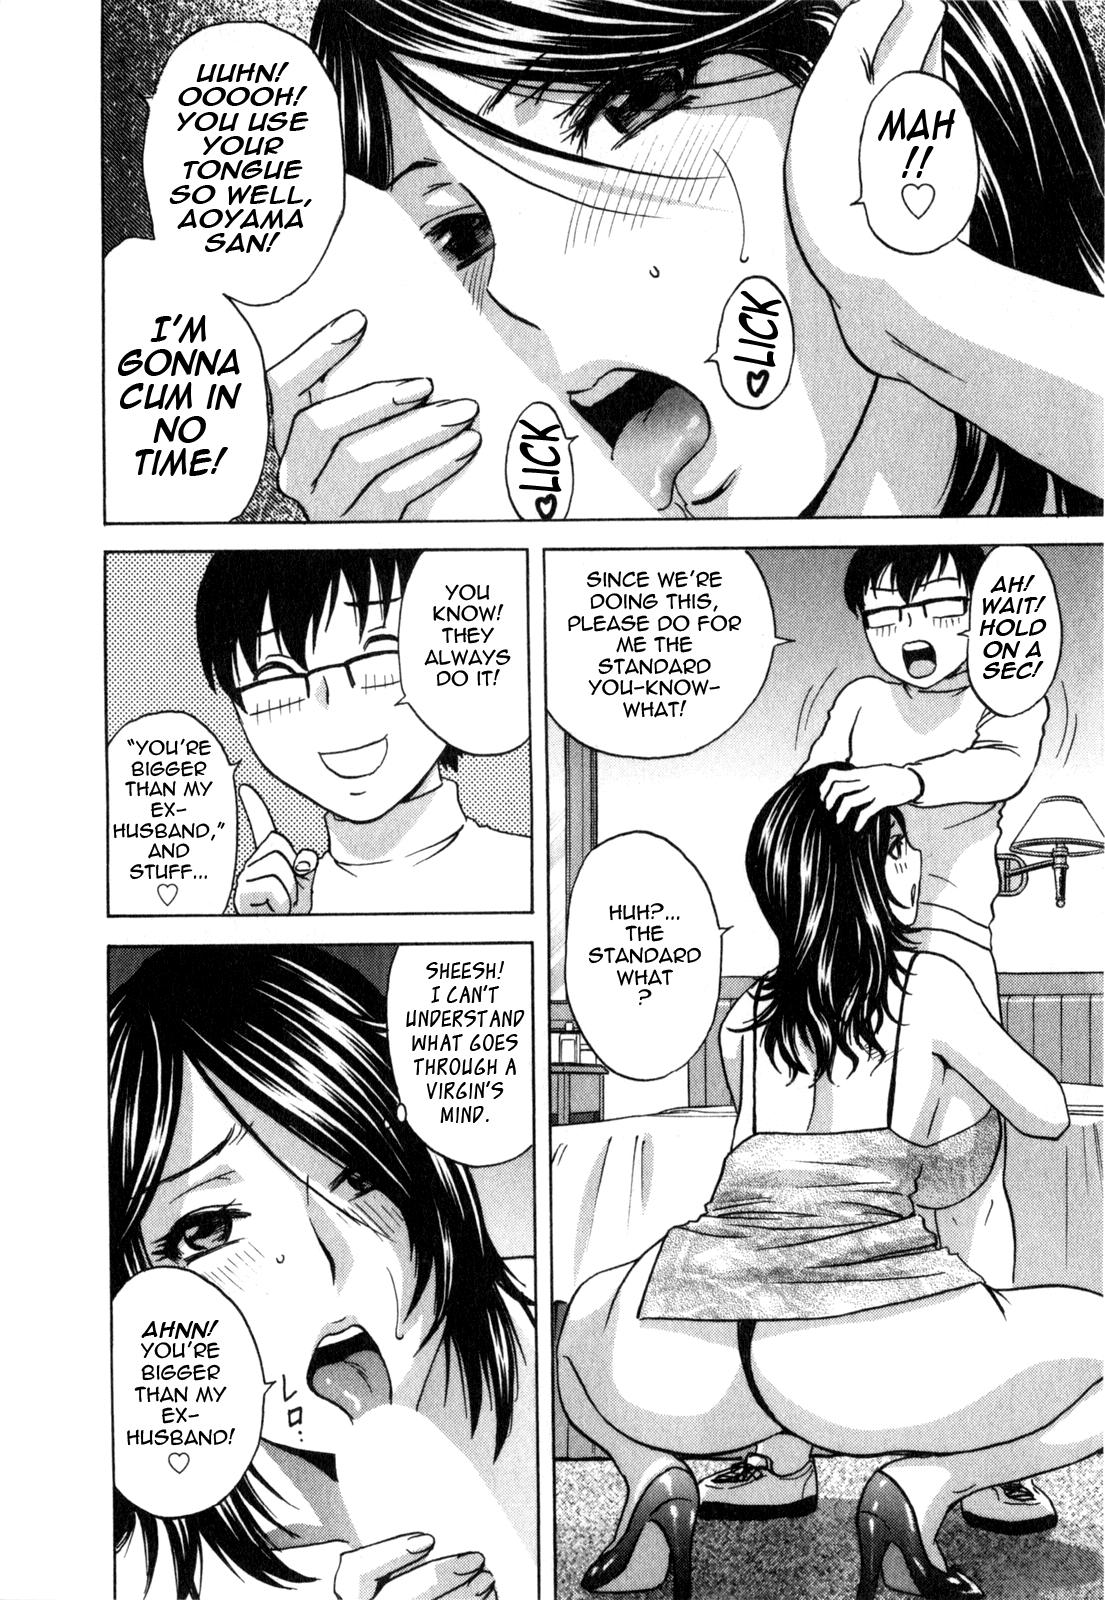 [Hidemaru] Life with Married Women Just Like a Manga 3 - Ch. 1-6 [English] {Tadanohito} 55